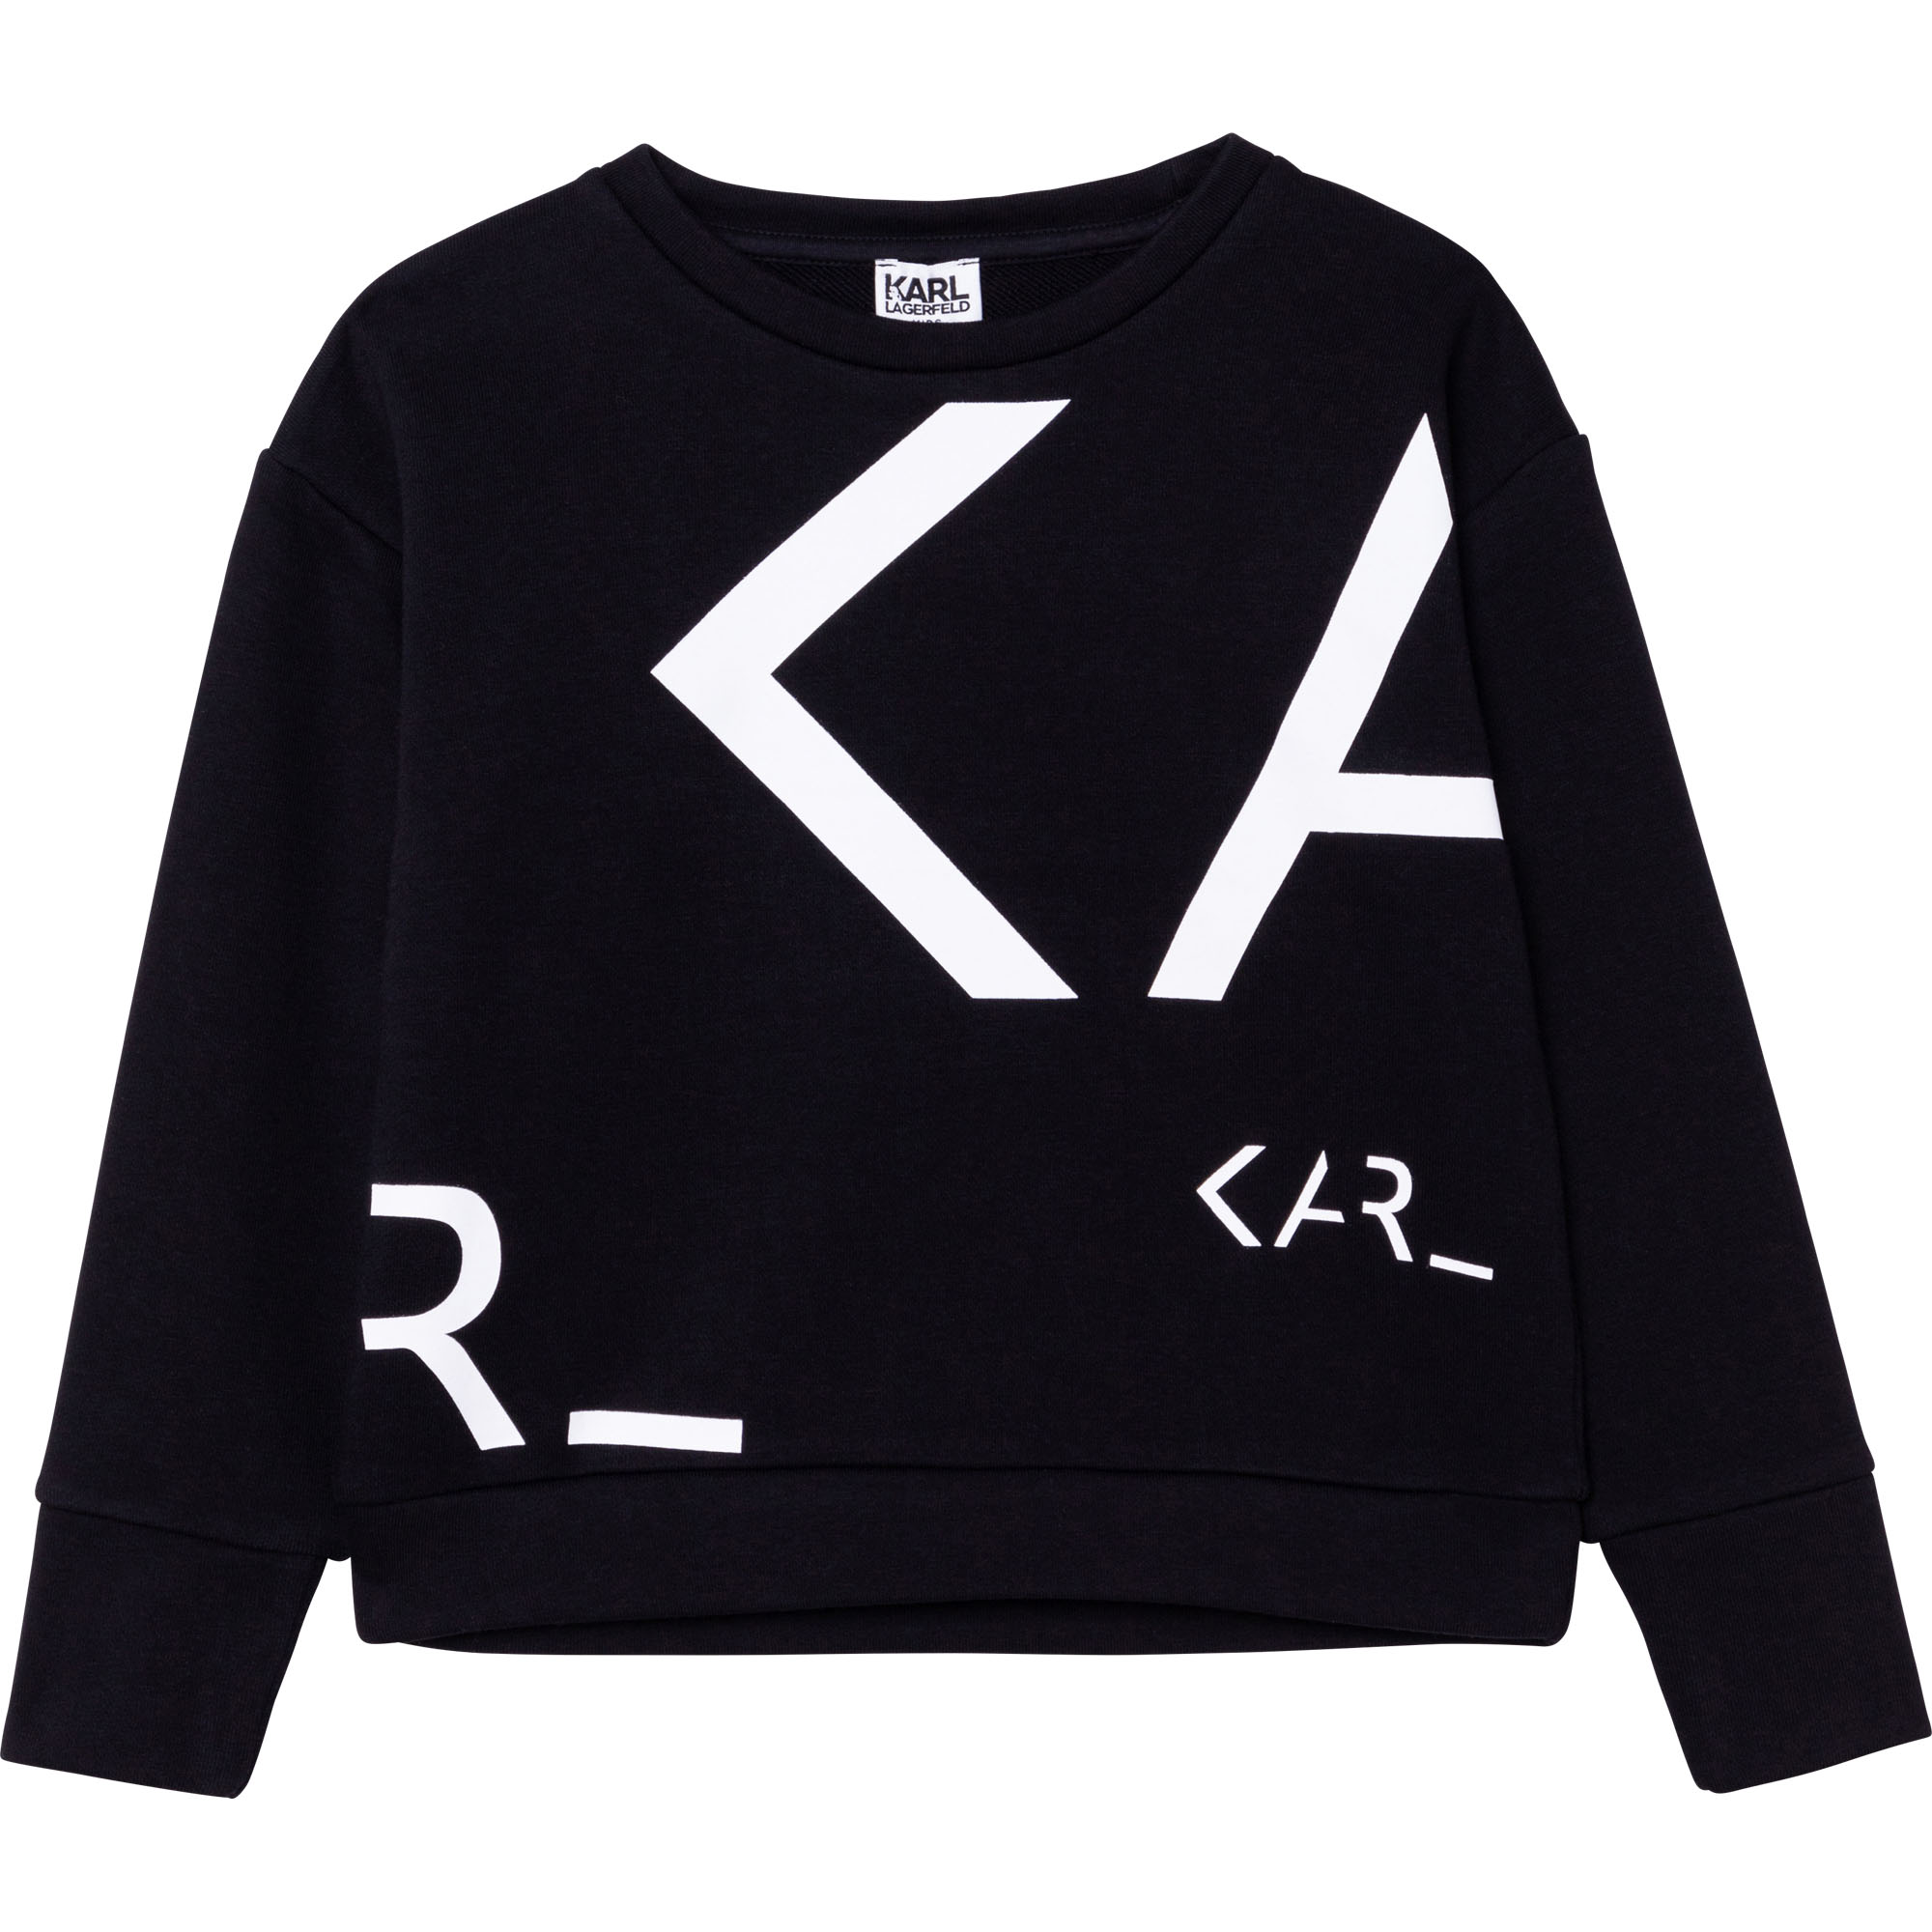 KIDS FASHION Jumpers & Sweatshirts Chenille Black/Multicolored 4Y discount 57% Karl Lagerfeld sweatshirt 